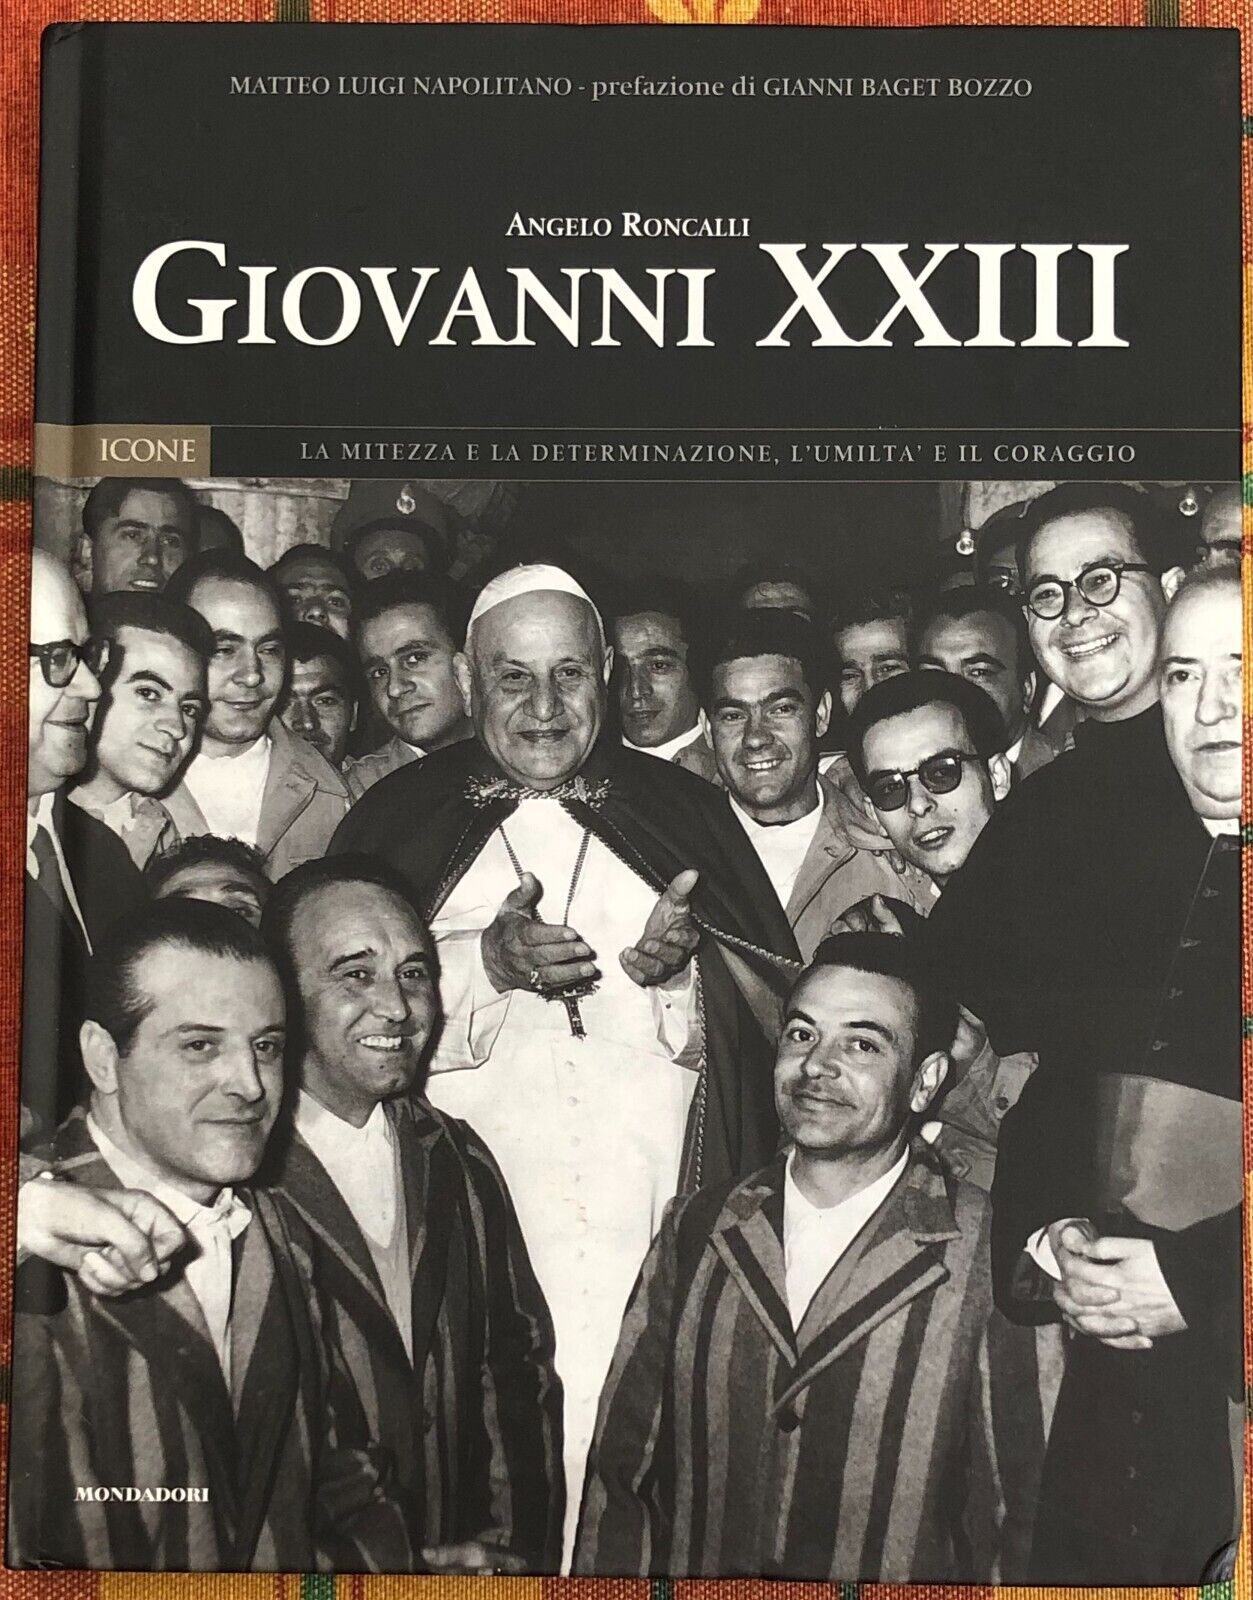 Icone del XX secolo Panorama n. 5 - Angelo Roncalli Giovanni XXIII di Matteo Lu